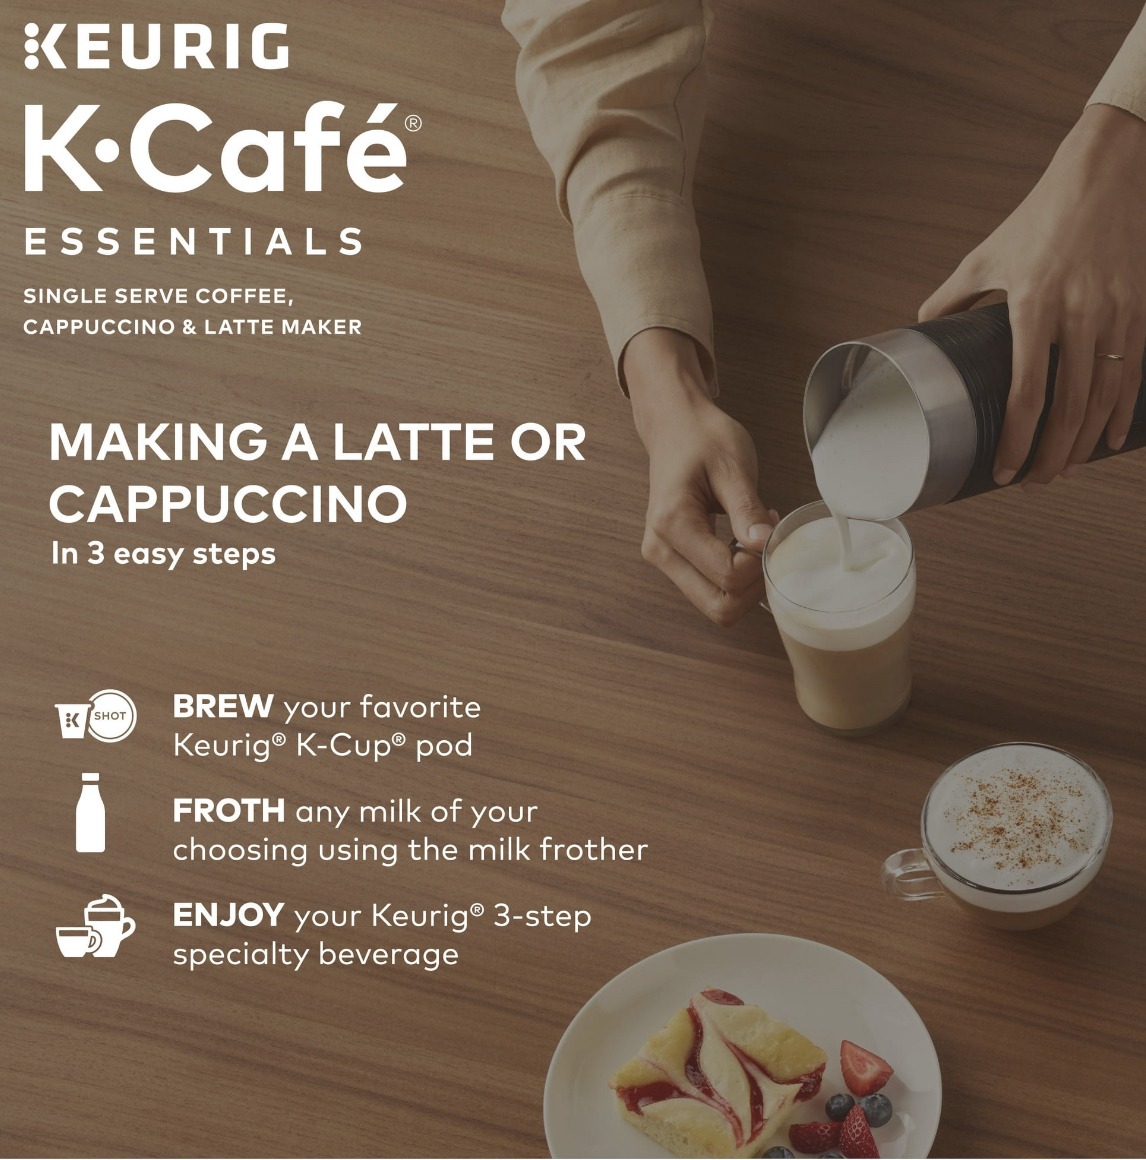 Keurig K-Cafe Single Serve Coffee Latte & Cappucc. Maker